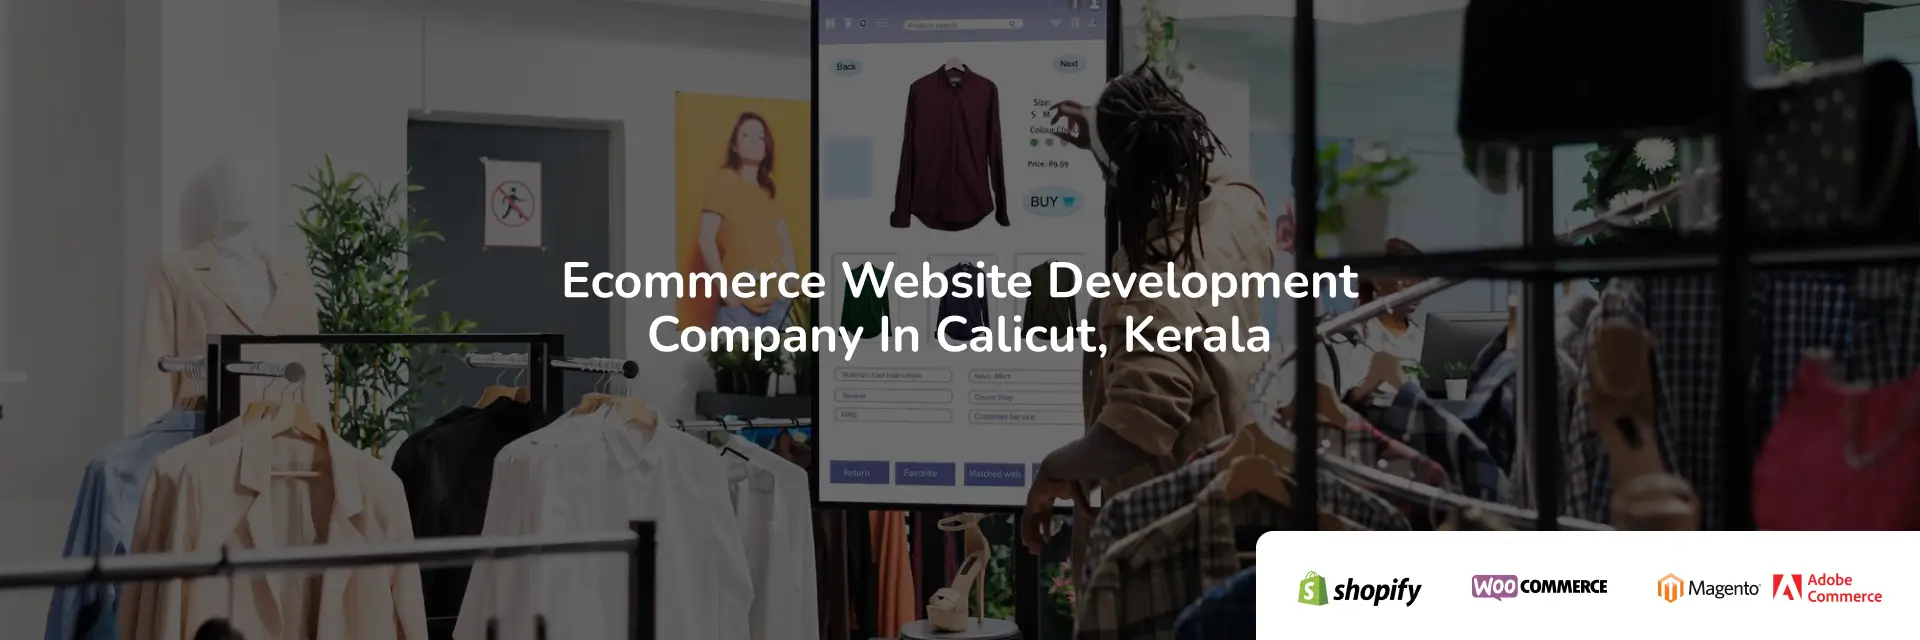 Ecommerce Website Development Company In Calicut, Kerala